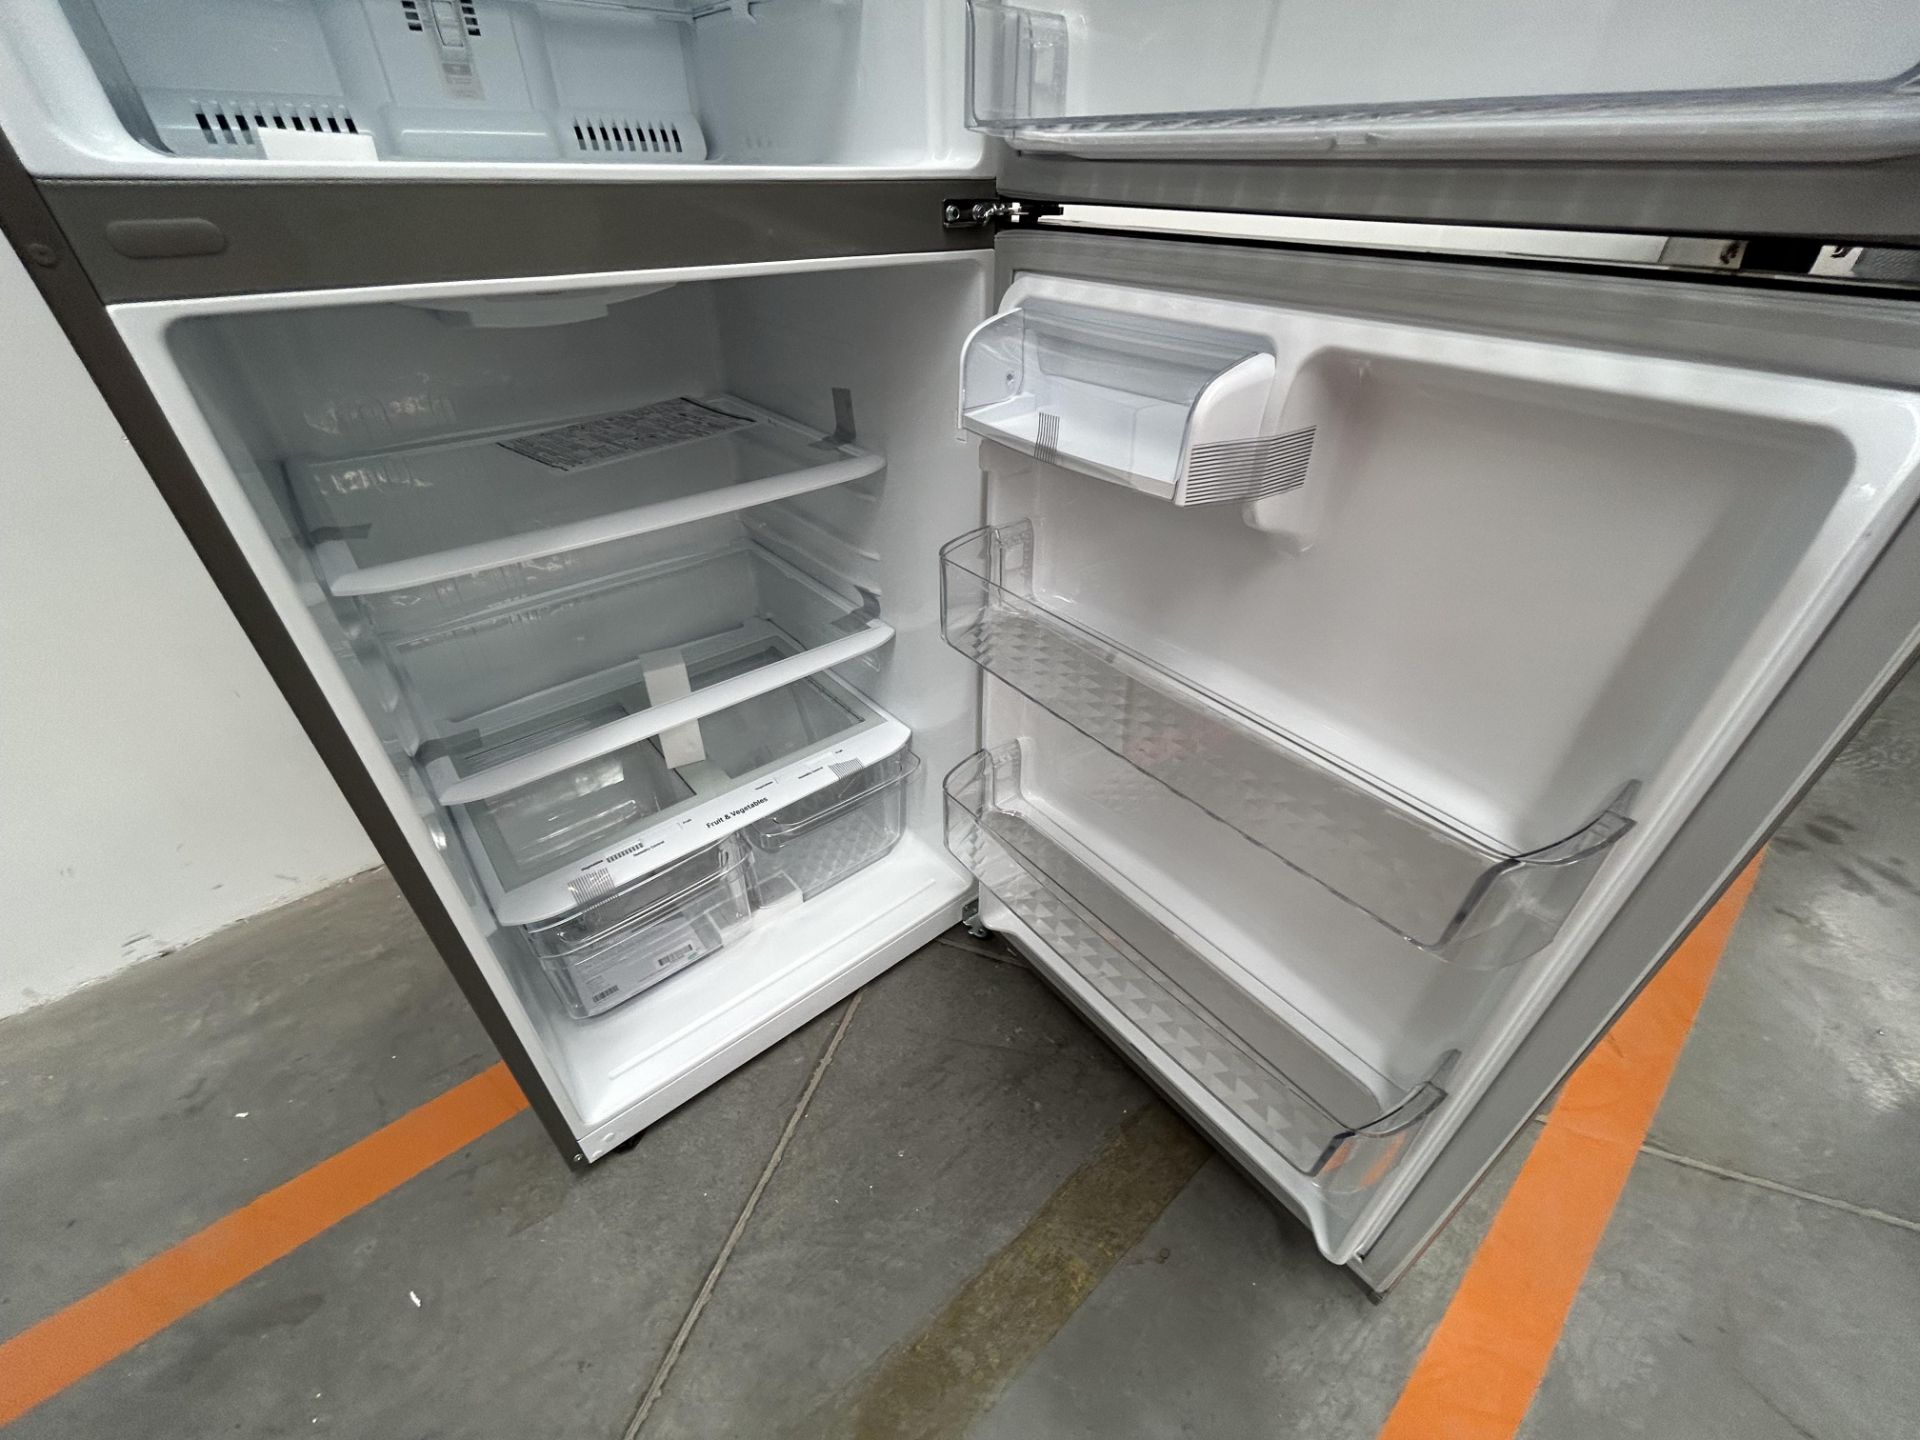 (NUEVO) Refrigerador Marca LG, Modelo LT57BPSX, Serie 1N111, Color GRIS - Image 5 of 5